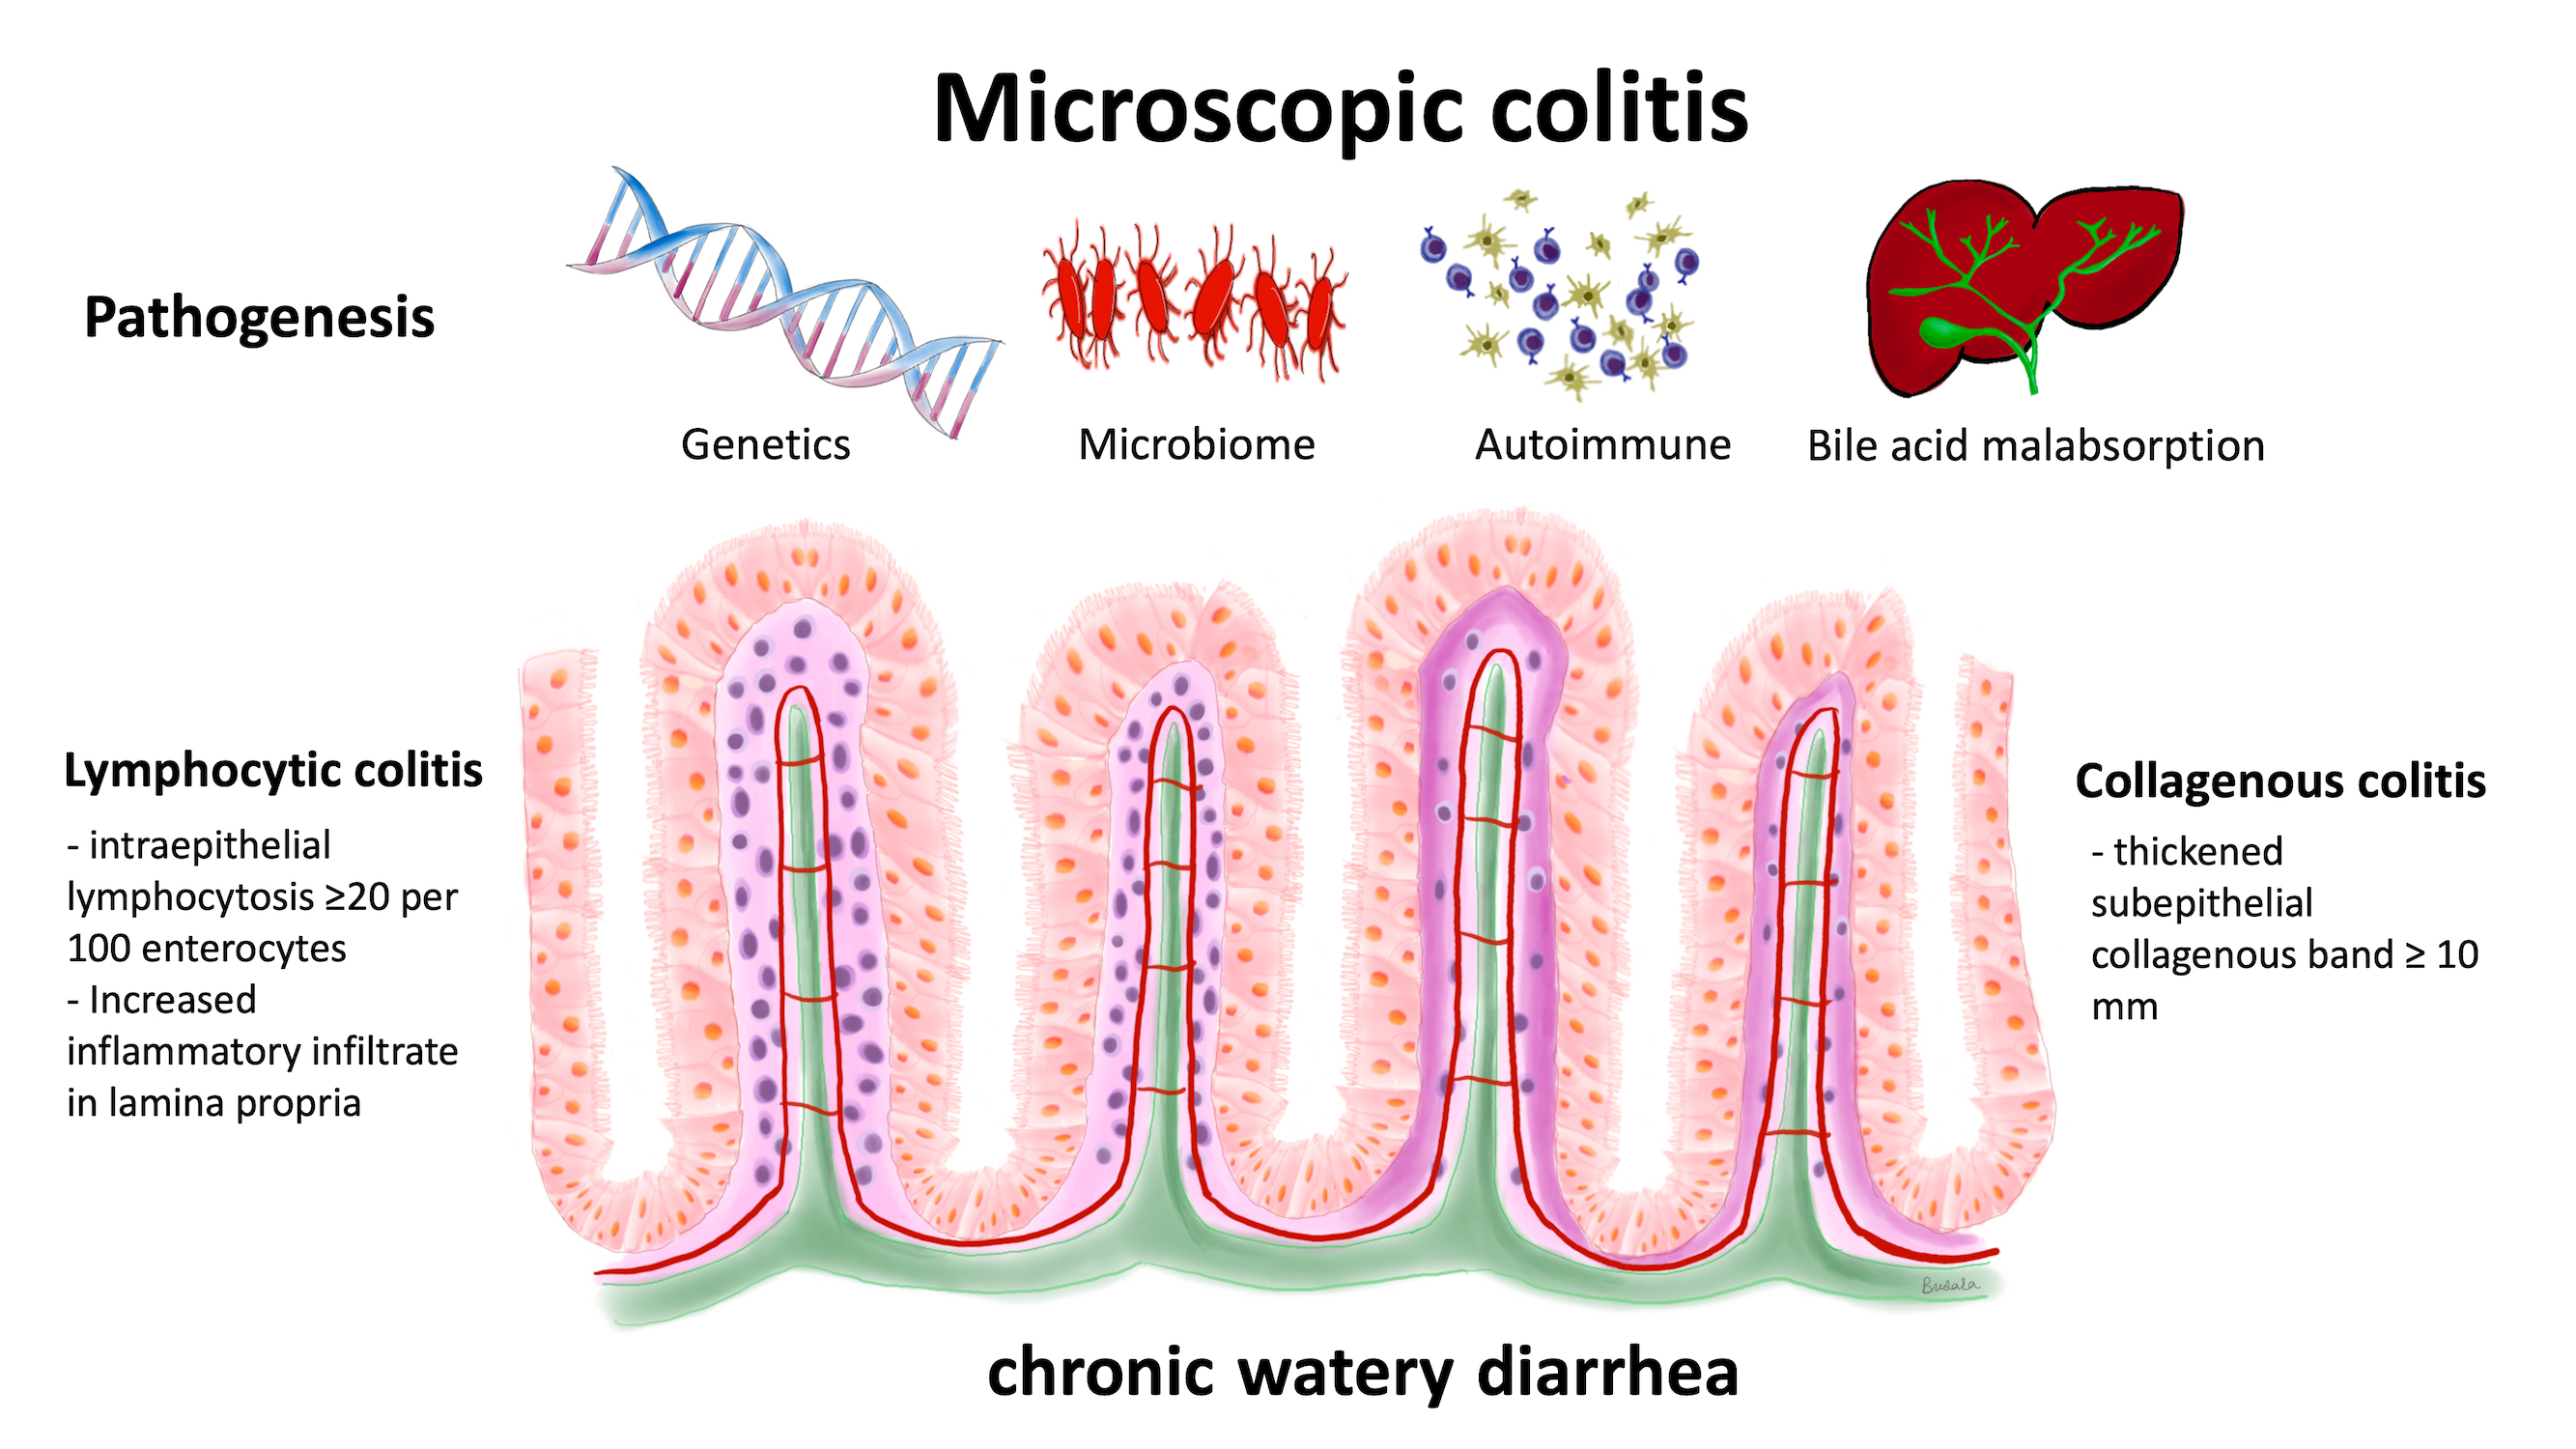 Graphical abstarct: Pathogenesis of microscopic colitis